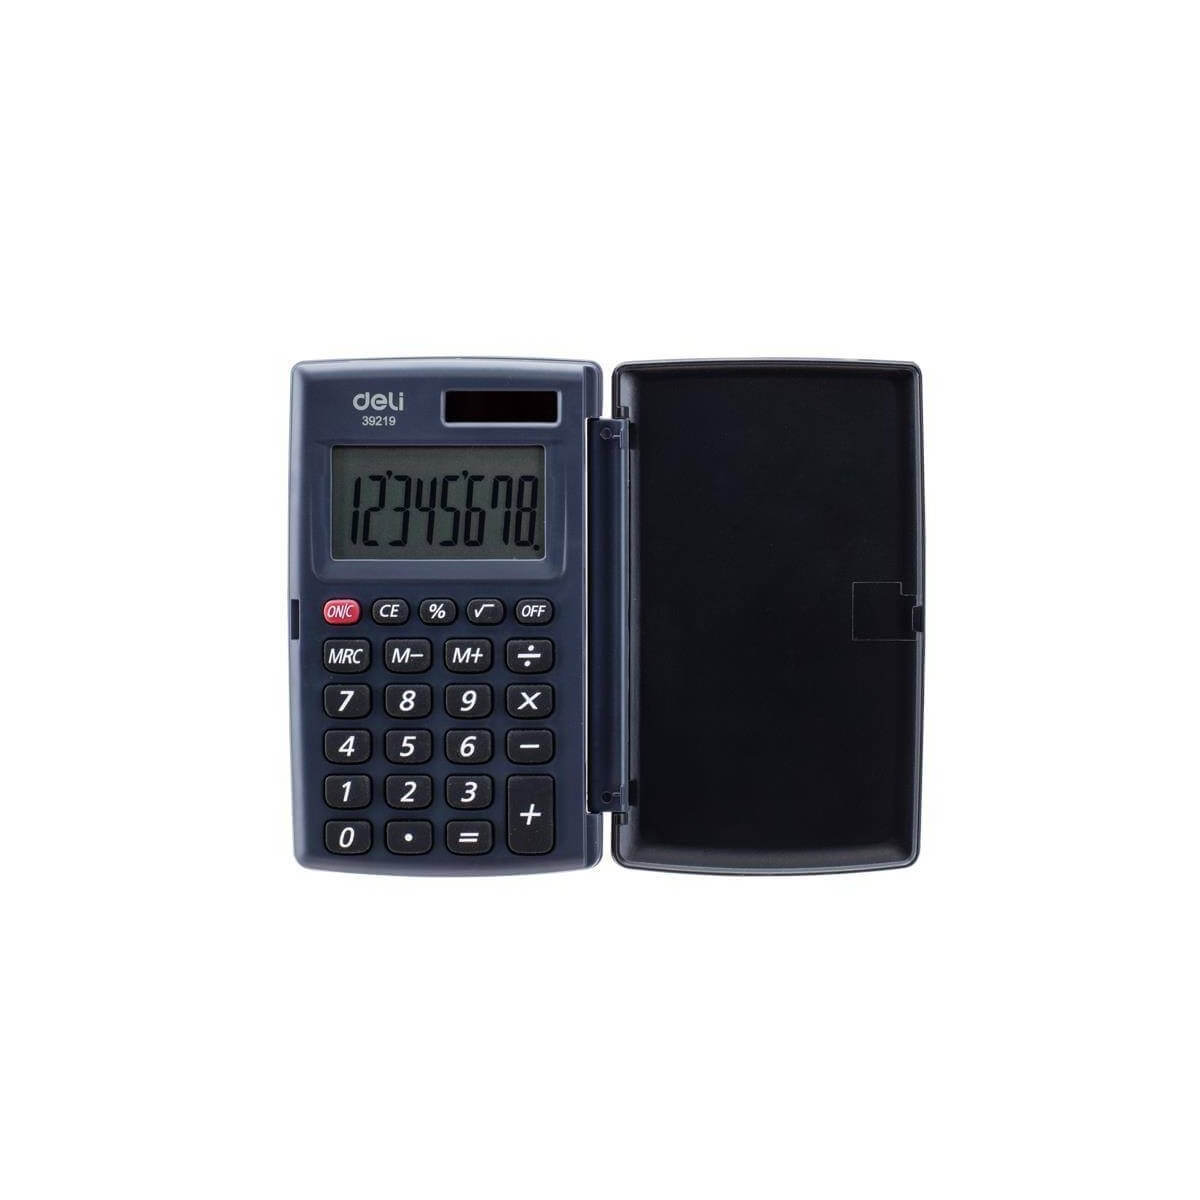 pocket calculator 8 Digits cover ref 39219 easy,auto power off : r key deli